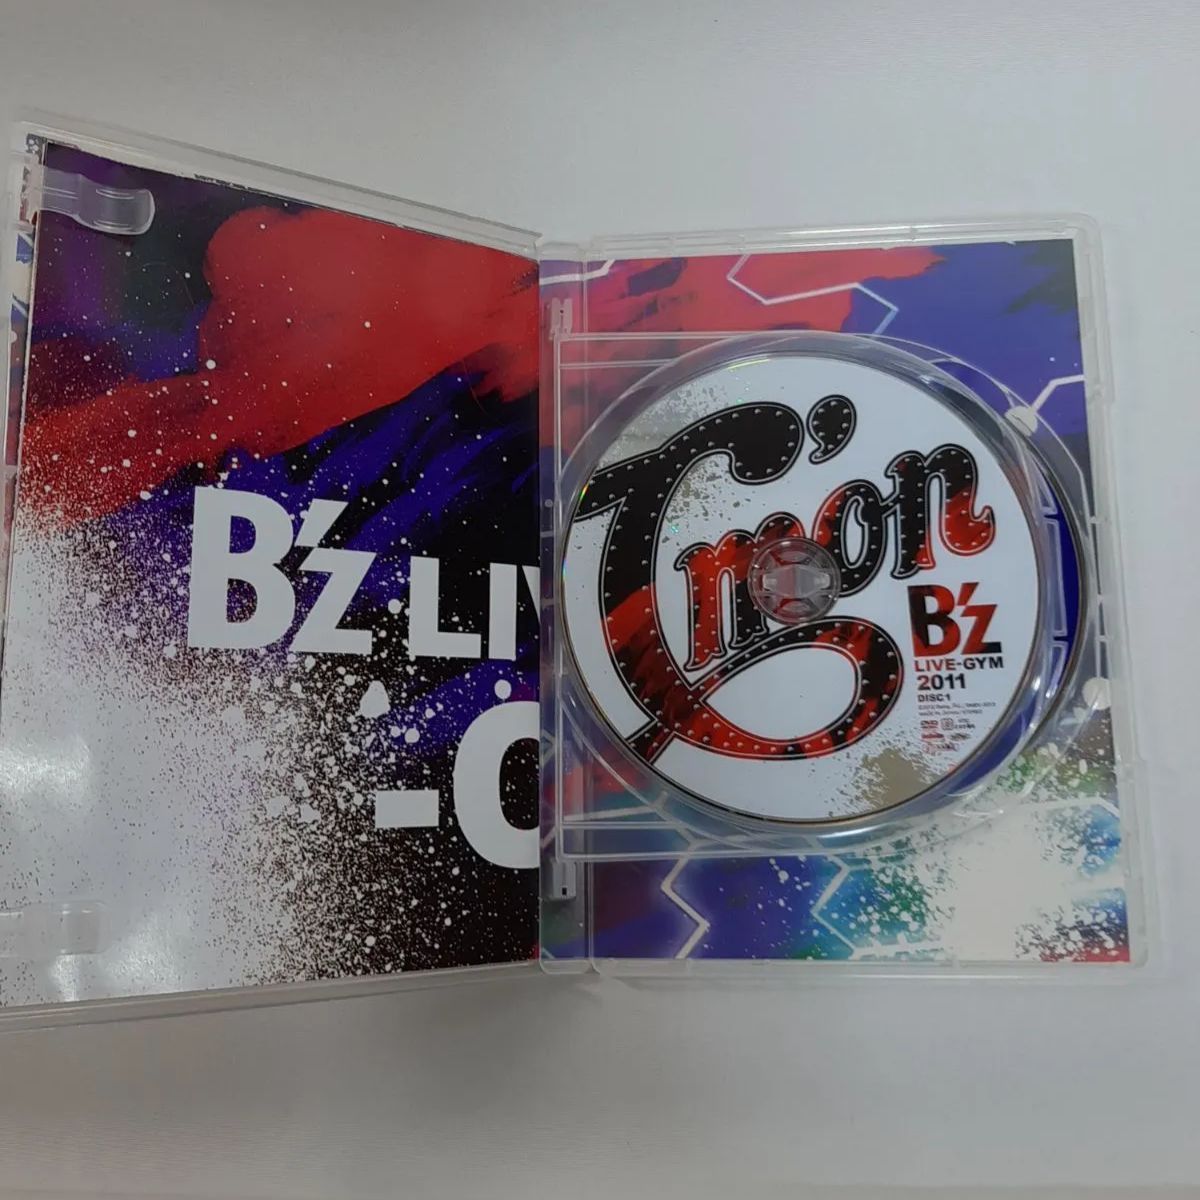 B'z LIVE-GYM 2011 -C'mon- (DVD) 2枚組 - メルカリ